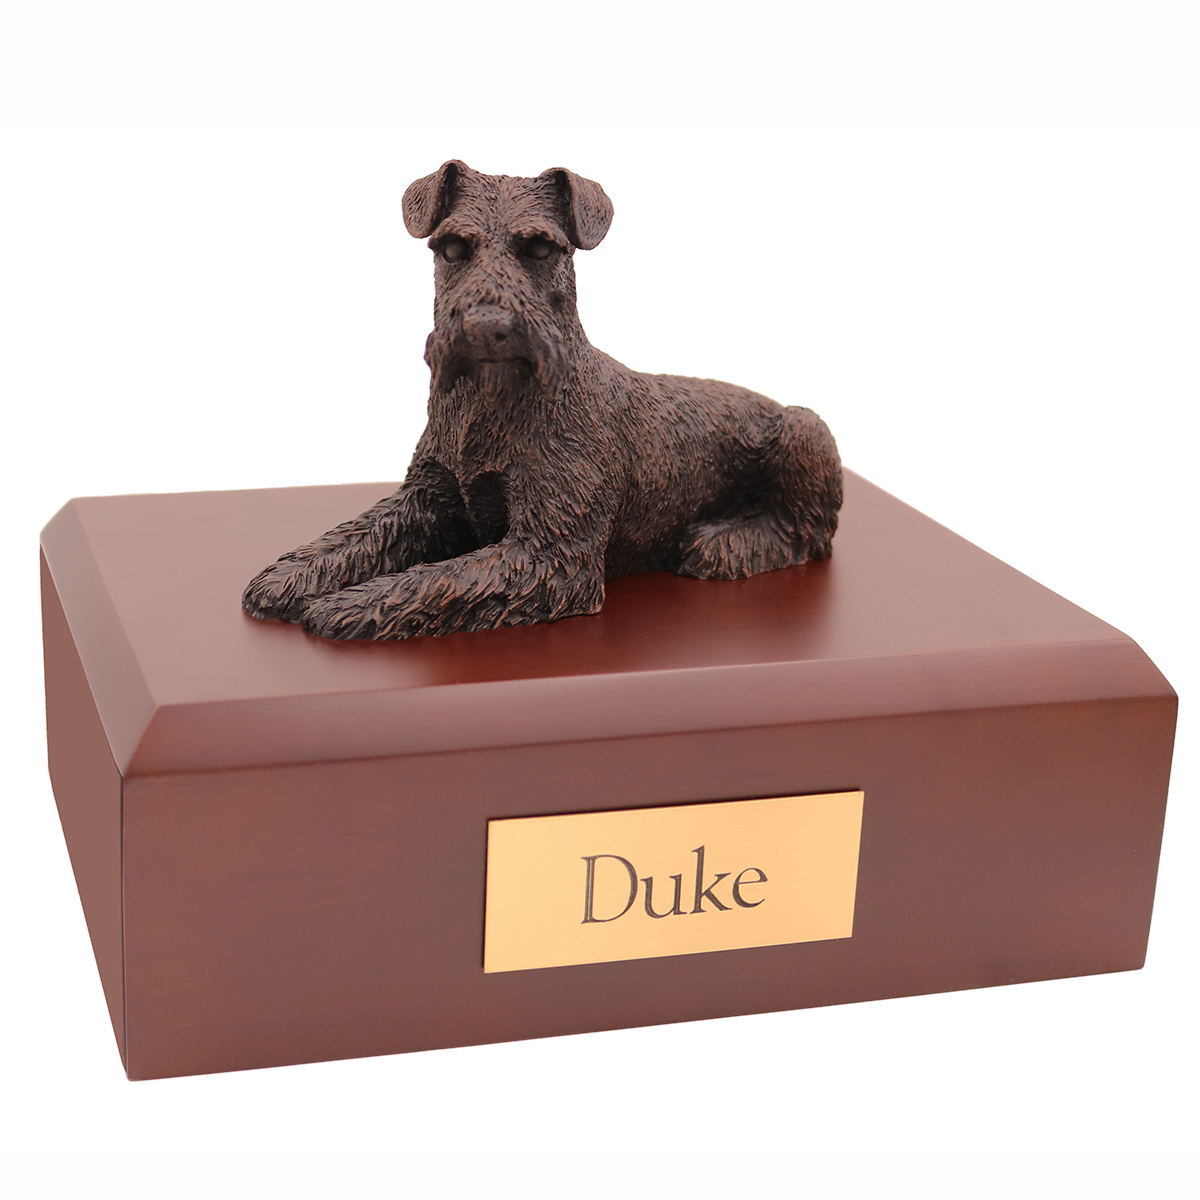 Dog, Schnauzer, Bronze - ears down - Figurine Urn